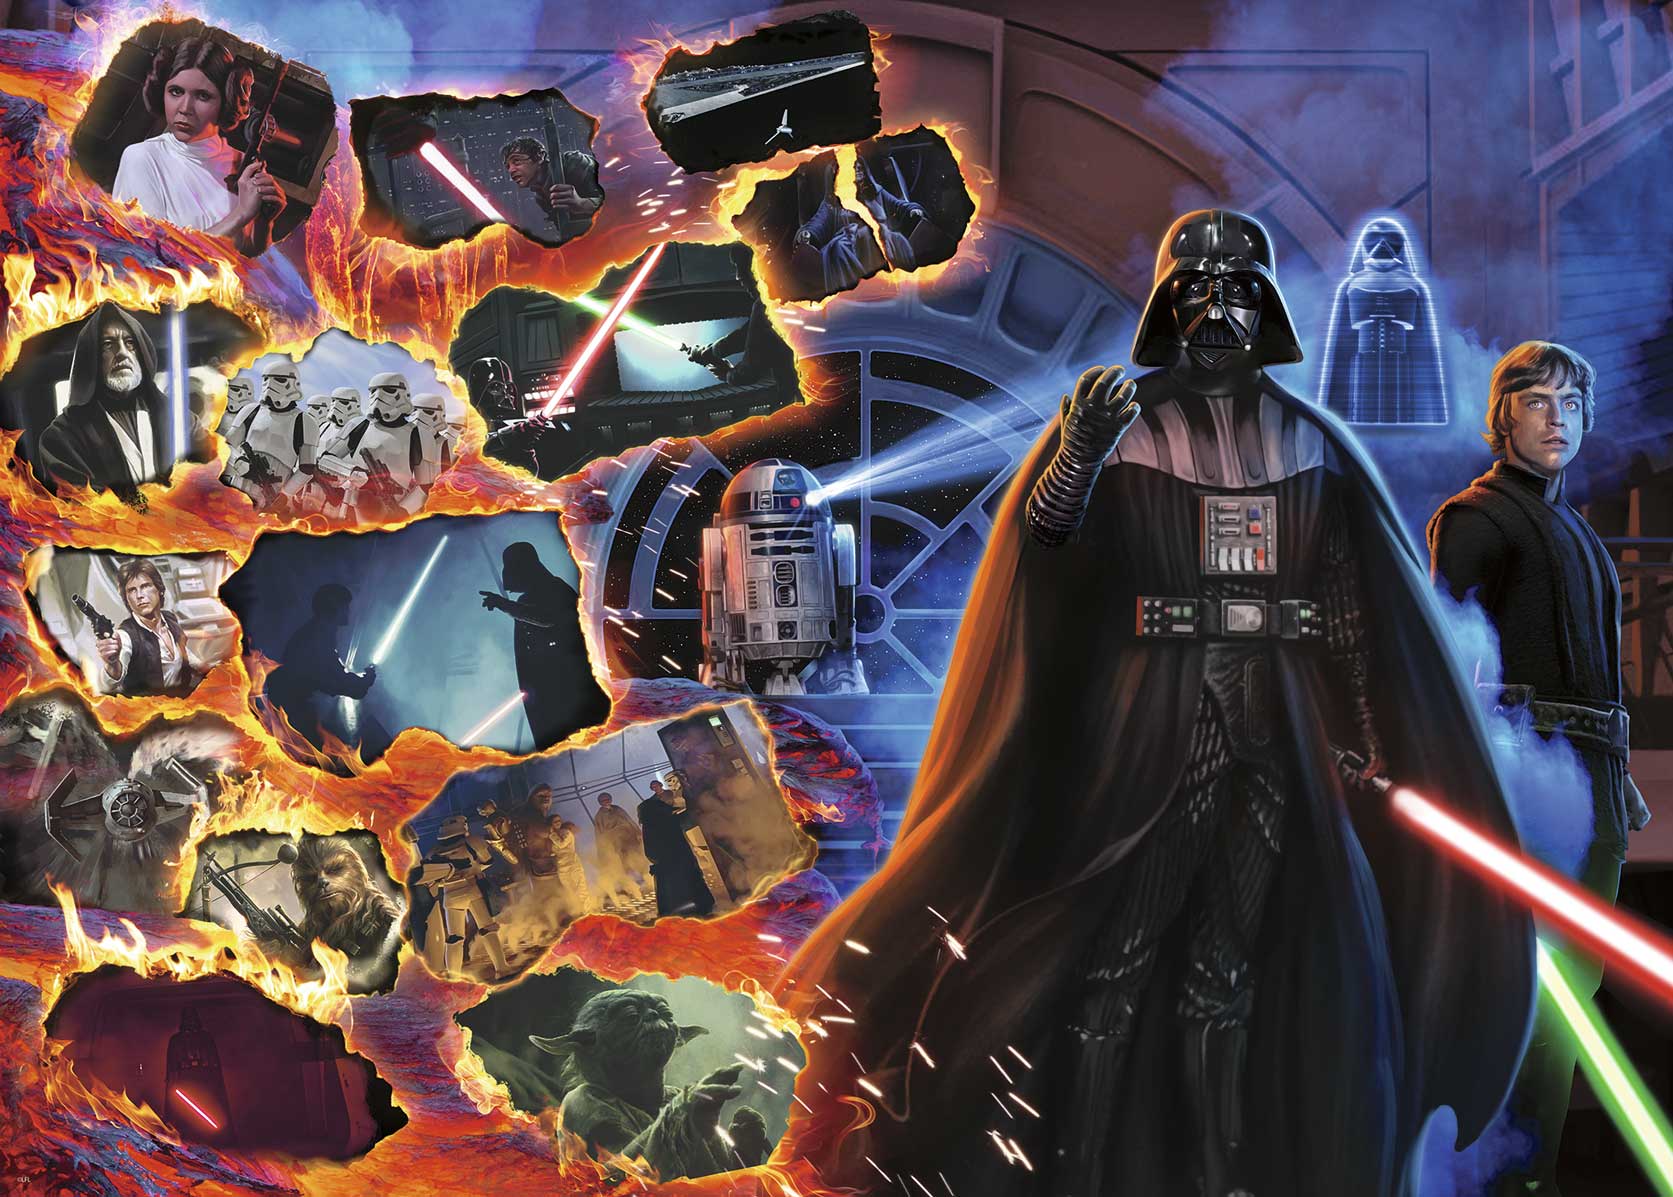 Puzzle Ravensburger Villanos Star Wars Darth Vader de 1000 Pzs